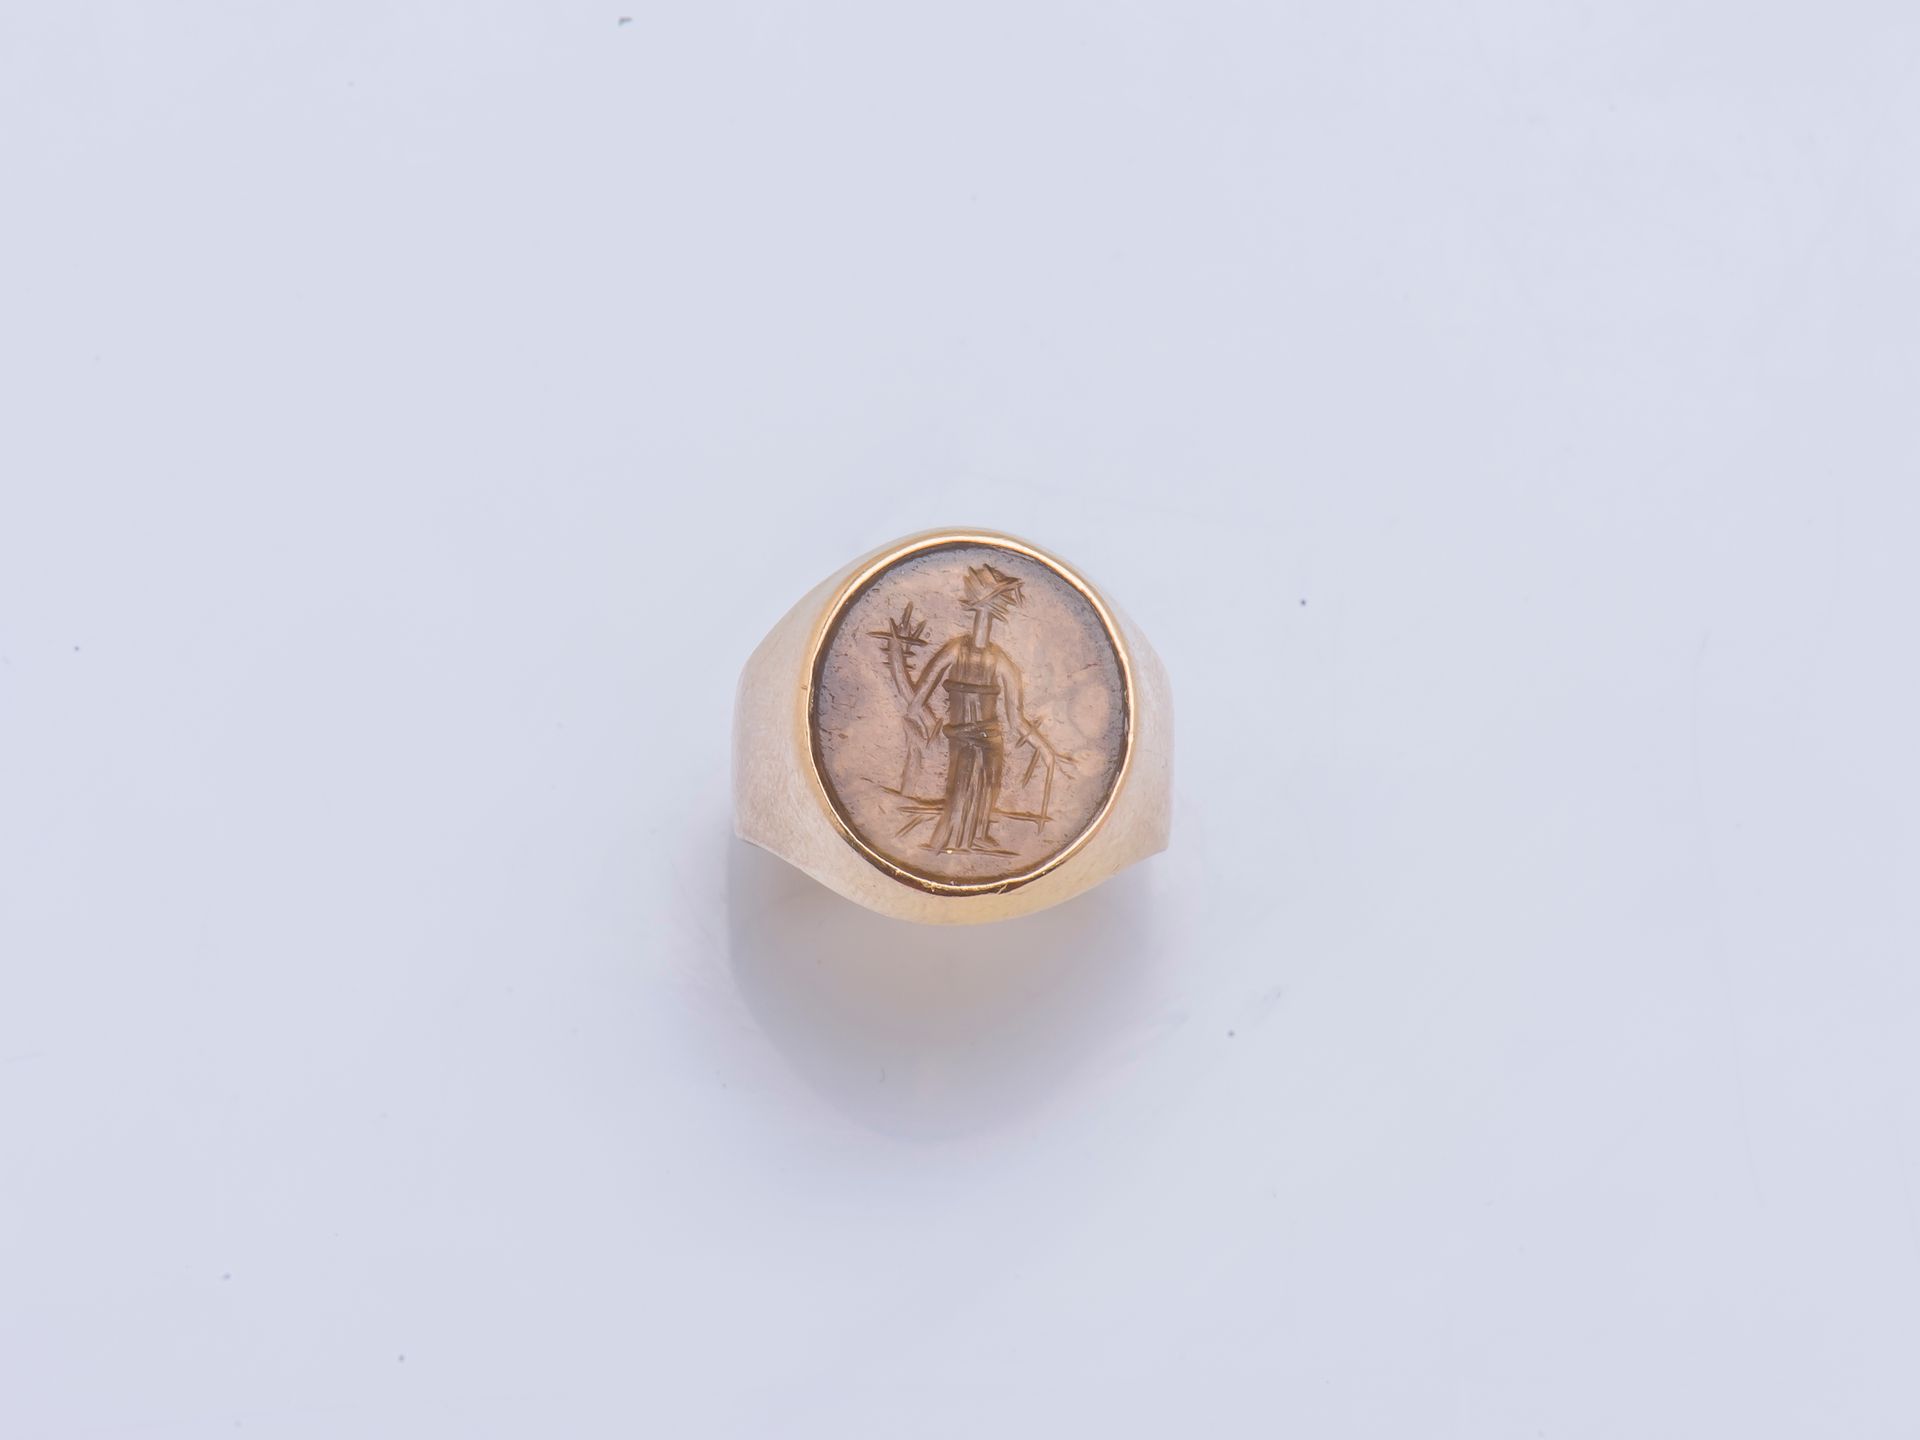 Null 黄金戒指18克拉（千分之七十五），在坚硬的石头上镶嵌了一个凹凸不平的字符。法国的工作。

手指大小：48 总重量：6.1克